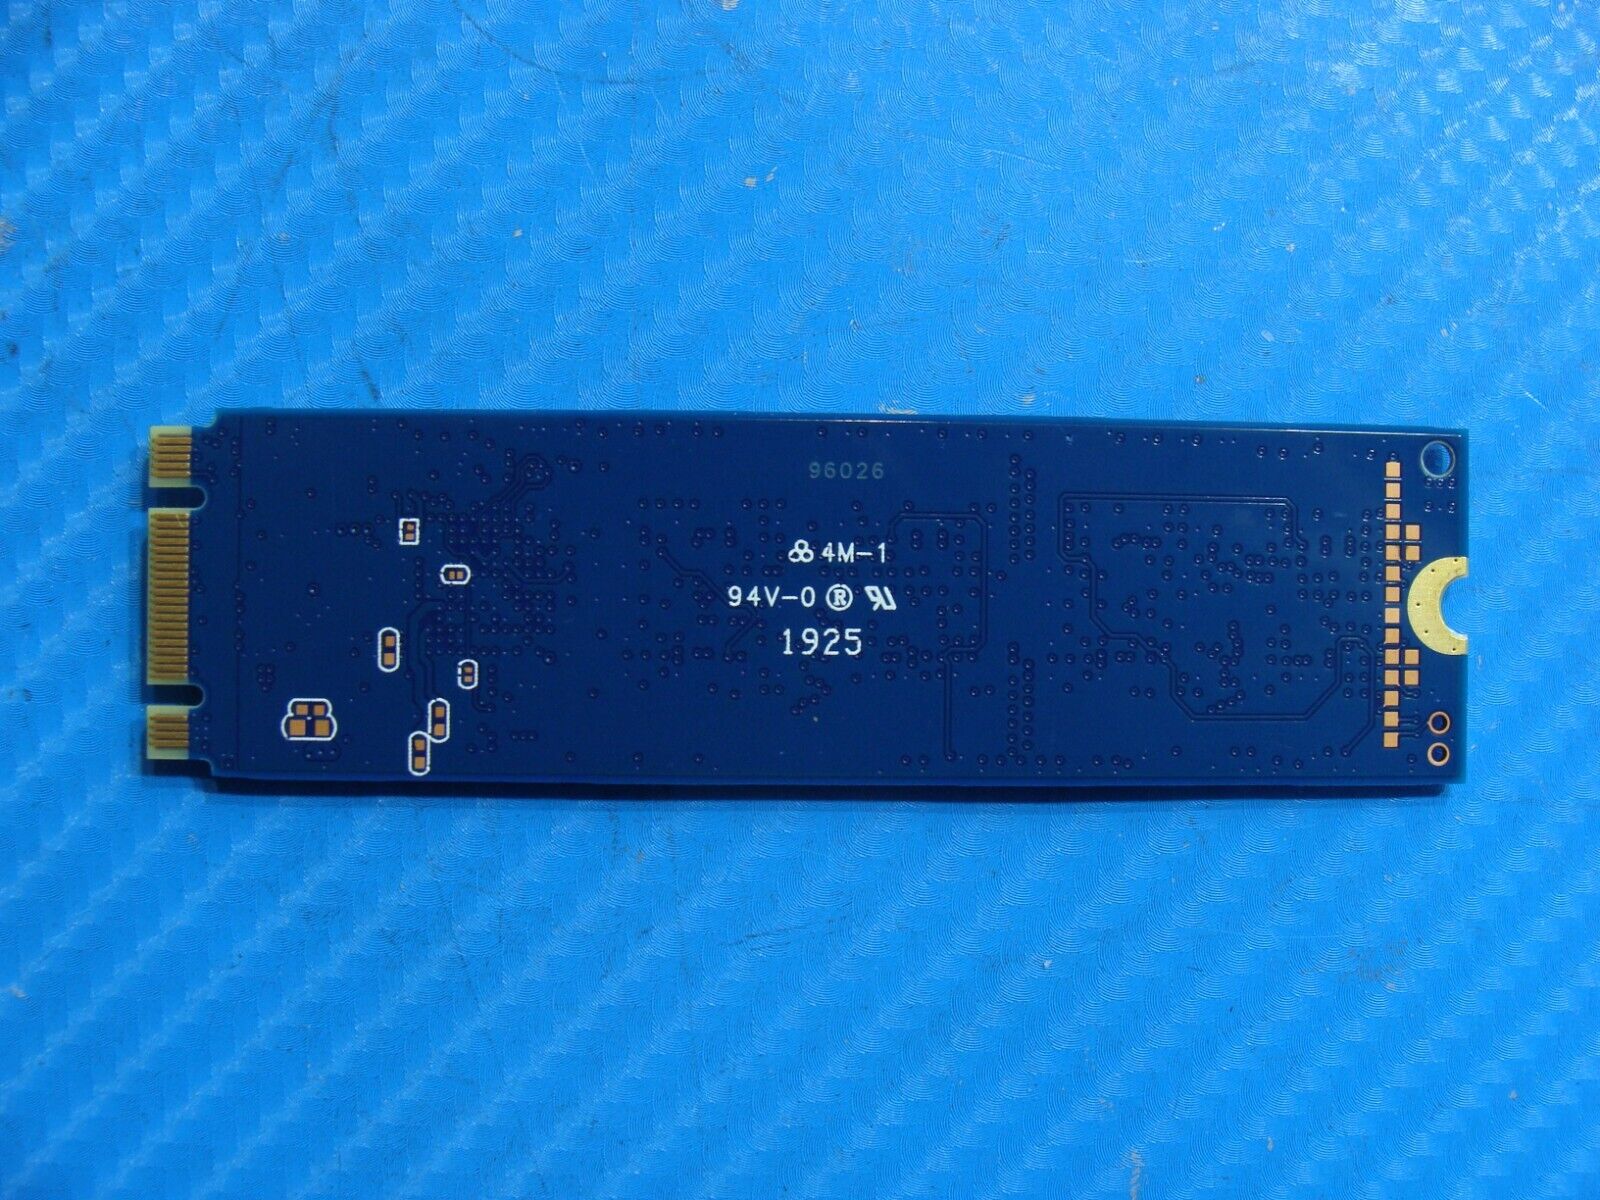 Asus X512DA Kingston 128GB SATA M.2 SSD Solid State Drive RBU-SNS8180DS3/128GJ